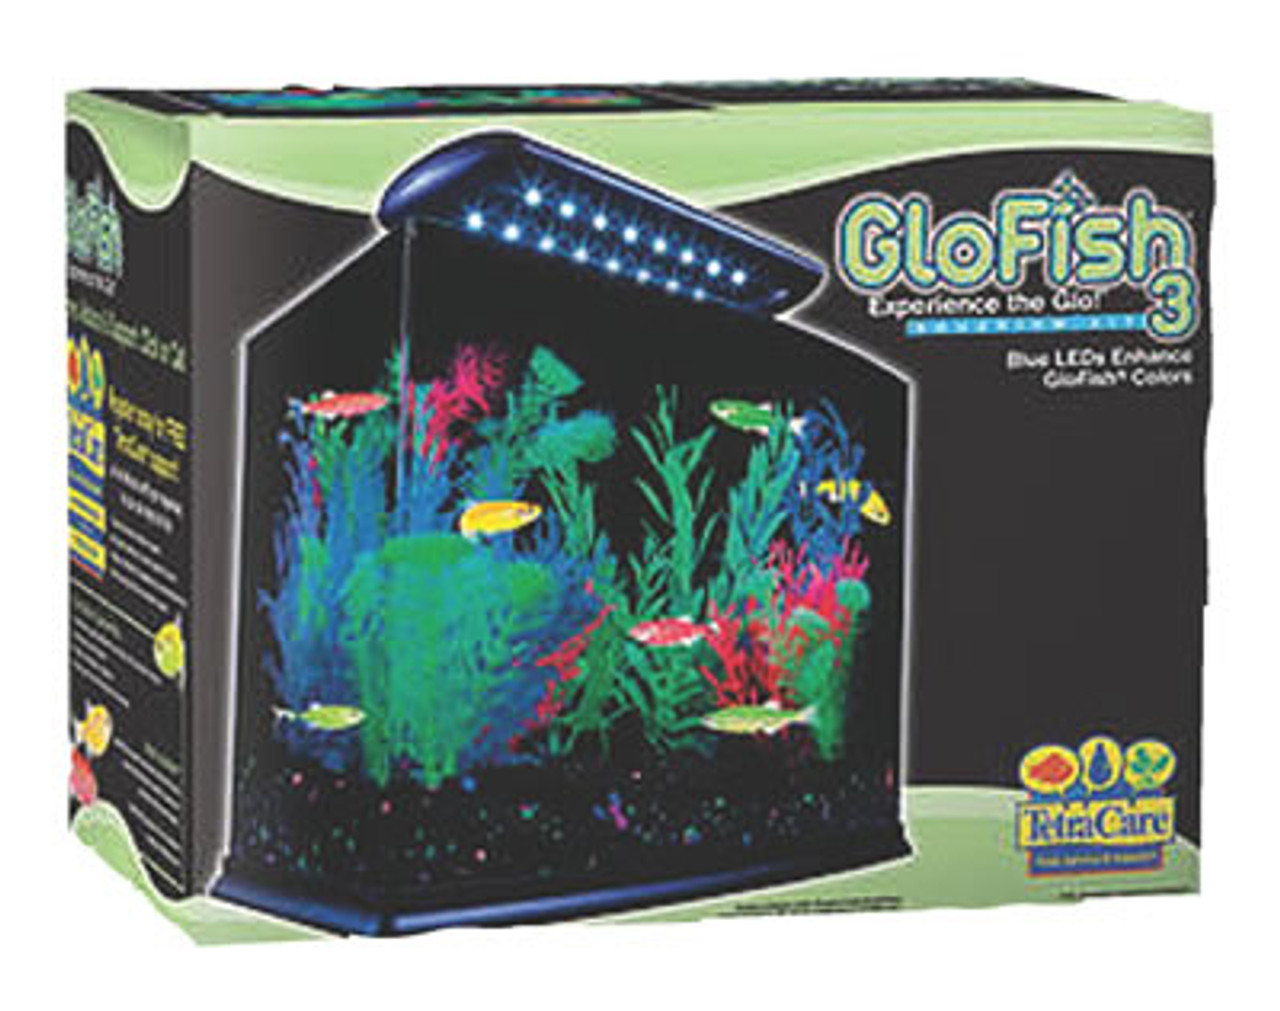 Tetra Glofish Aquarium Kit, 3 Gal. - CountryMax